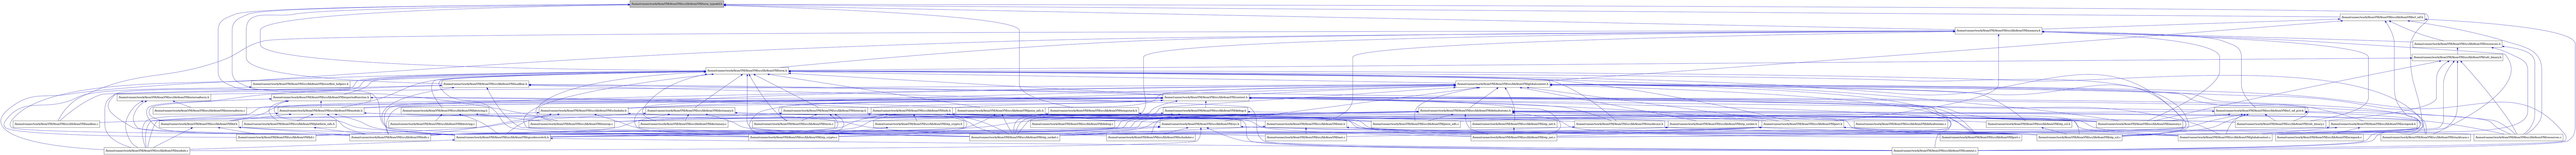 digraph {
    graph [bgcolor="#00000000"]
    node [shape=rectangle style=filled fillcolor="#FFFFFF" font=Helvetica padding=2]
    edge [color="#1414CE"]
    "11" [label="/home/runner/work/AtomVM/AtomVM/src/libAtomVM/bif.c" tooltip="/home/runner/work/AtomVM/AtomVM/src/libAtomVM/bif.c"]
    "48" [label="/home/runner/work/AtomVM/AtomVM/src/libAtomVM/dictionary.c" tooltip="/home/runner/work/AtomVM/AtomVM/src/libAtomVM/dictionary.c"]
    "10" [label="/home/runner/work/AtomVM/AtomVM/src/libAtomVM/bif.h" tooltip="/home/runner/work/AtomVM/AtomVM/src/libAtomVM/bif.h"]
    "56" [label="/home/runner/work/AtomVM/AtomVM/src/libAtomVM/dictionary.h" tooltip="/home/runner/work/AtomVM/AtomVM/src/libAtomVM/dictionary.h"]
    "55" [label="/home/runner/work/AtomVM/AtomVM/src/libAtomVM/bitstring.c" tooltip="/home/runner/work/AtomVM/AtomVM/src/libAtomVM/bitstring.c"]
    "54" [label="/home/runner/work/AtomVM/AtomVM/src/libAtomVM/bitstring.h" tooltip="/home/runner/work/AtomVM/AtomVM/src/libAtomVM/bitstring.h"]
    "33" [label="/home/runner/work/AtomVM/AtomVM/src/libAtomVM/platform_nifs.h" tooltip="/home/runner/work/AtomVM/AtomVM/src/libAtomVM/platform_nifs.h"]
    "21" [label="/home/runner/work/AtomVM/AtomVM/src/libAtomVM/posix_nifs.c" tooltip="/home/runner/work/AtomVM/AtomVM/src/libAtomVM/posix_nifs.c"]
    "49" [label="/home/runner/work/AtomVM/AtomVM/src/libAtomVM/posix_nifs.h" tooltip="/home/runner/work/AtomVM/AtomVM/src/libAtomVM/posix_nifs.h"]
    "47" [label="/home/runner/work/AtomVM/AtomVM/src/libAtomVM/defaultatoms.c" tooltip="/home/runner/work/AtomVM/AtomVM/src/libAtomVM/defaultatoms.c"]
    "46" [label="/home/runner/work/AtomVM/AtomVM/src/libAtomVM/defaultatoms.h" tooltip="/home/runner/work/AtomVM/AtomVM/src/libAtomVM/defaultatoms.h"]
    "61" [label="/home/runner/work/AtomVM/AtomVM/src/libAtomVM/tempstack.h" tooltip="/home/runner/work/AtomVM/AtomVM/src/libAtomVM/tempstack.h"]
    "27" [label="/home/runner/work/AtomVM/AtomVM/src/libAtomVM/inet.c" tooltip="/home/runner/work/AtomVM/AtomVM/src/libAtomVM/inet.c"]
    "26" [label="/home/runner/work/AtomVM/AtomVM/src/libAtomVM/inet.h" tooltip="/home/runner/work/AtomVM/AtomVM/src/libAtomVM/inet.h"]
    "17" [label="/home/runner/work/AtomVM/AtomVM/src/libAtomVM/scheduler.c" tooltip="/home/runner/work/AtomVM/AtomVM/src/libAtomVM/scheduler.c"]
    "44" [label="/home/runner/work/AtomVM/AtomVM/src/libAtomVM/scheduler.h" tooltip="/home/runner/work/AtomVM/AtomVM/src/libAtomVM/scheduler.h"]
    "57" [label="/home/runner/work/AtomVM/AtomVM/src/libAtomVM/exportedfunction.h" tooltip="/home/runner/work/AtomVM/AtomVM/src/libAtomVM/exportedfunction.h"]
    "3" [label="/home/runner/work/AtomVM/AtomVM/src/libAtomVM/context.c" tooltip="/home/runner/work/AtomVM/AtomVM/src/libAtomVM/context.c"]
    "9" [label="/home/runner/work/AtomVM/AtomVM/src/libAtomVM/context.h" tooltip="/home/runner/work/AtomVM/AtomVM/src/libAtomVM/context.h"]
    "42" [label="/home/runner/work/AtomVM/AtomVM/src/libAtomVM/port.c" tooltip="/home/runner/work/AtomVM/AtomVM/src/libAtomVM/port.c"]
    "43" [label="/home/runner/work/AtomVM/AtomVM/src/libAtomVM/port.h" tooltip="/home/runner/work/AtomVM/AtomVM/src/libAtomVM/port.h"]
    "59" [label="/home/runner/work/AtomVM/AtomVM/src/libAtomVM/overflow_helpers.h" tooltip="/home/runner/work/AtomVM/AtomVM/src/libAtomVM/overflow_helpers.h"]
    "1" [label="/home/runner/work/AtomVM/AtomVM/src/libAtomVM/term_typedef.h" tooltip="/home/runner/work/AtomVM/AtomVM/src/libAtomVM/term_typedef.h" fillcolor="#BFBFBF"]
    "35" [label="/home/runner/work/AtomVM/AtomVM/src/libAtomVM/stacktrace.c" tooltip="/home/runner/work/AtomVM/AtomVM/src/libAtomVM/stacktrace.c"]
    "34" [label="/home/runner/work/AtomVM/AtomVM/src/libAtomVM/stacktrace.h" tooltip="/home/runner/work/AtomVM/AtomVM/src/libAtomVM/stacktrace.h"]
    "22" [label="/home/runner/work/AtomVM/AtomVM/src/libAtomVM/refc_binary.c" tooltip="/home/runner/work/AtomVM/AtomVM/src/libAtomVM/refc_binary.c"]
    "52" [label="/home/runner/work/AtomVM/AtomVM/src/libAtomVM/refc_binary.h" tooltip="/home/runner/work/AtomVM/AtomVM/src/libAtomVM/refc_binary.h"]
    "45" [label="/home/runner/work/AtomVM/AtomVM/src/libAtomVM/mailbox.c" tooltip="/home/runner/work/AtomVM/AtomVM/src/libAtomVM/mailbox.c"]
    "60" [label="/home/runner/work/AtomVM/AtomVM/src/libAtomVM/mailbox.h" tooltip="/home/runner/work/AtomVM/AtomVM/src/libAtomVM/mailbox.h"]
    "12" [label="/home/runner/work/AtomVM/AtomVM/src/libAtomVM/module.c" tooltip="/home/runner/work/AtomVM/AtomVM/src/libAtomVM/module.c"]
    "32" [label="/home/runner/work/AtomVM/AtomVM/src/libAtomVM/module.h" tooltip="/home/runner/work/AtomVM/AtomVM/src/libAtomVM/module.h"]
    "6" [label="/home/runner/work/AtomVM/AtomVM/src/libAtomVM/avmpack.c" tooltip="/home/runner/work/AtomVM/AtomVM/src/libAtomVM/avmpack.c"]
    "5" [label="/home/runner/work/AtomVM/AtomVM/src/libAtomVM/avmpack.h" tooltip="/home/runner/work/AtomVM/AtomVM/src/libAtomVM/avmpack.h"]
    "31" [label="/home/runner/work/AtomVM/AtomVM/src/libAtomVM/term.c" tooltip="/home/runner/work/AtomVM/AtomVM/src/libAtomVM/term.c"]
    "53" [label="/home/runner/work/AtomVM/AtomVM/src/libAtomVM/term.h" tooltip="/home/runner/work/AtomVM/AtomVM/src/libAtomVM/term.h"]
    "2" [label="/home/runner/work/AtomVM/AtomVM/src/libAtomVM/erl_nif.h" tooltip="/home/runner/work/AtomVM/AtomVM/src/libAtomVM/erl_nif.h"]
    "29" [label="/home/runner/work/AtomVM/AtomVM/src/libAtomVM/interop.c" tooltip="/home/runner/work/AtomVM/AtomVM/src/libAtomVM/interop.c"]
    "20" [label="/home/runner/work/AtomVM/AtomVM/src/libAtomVM/otp_ssl.c" tooltip="/home/runner/work/AtomVM/AtomVM/src/libAtomVM/otp_ssl.c"]
    "25" [label="/home/runner/work/AtomVM/AtomVM/src/libAtomVM/interop.h" tooltip="/home/runner/work/AtomVM/AtomVM/src/libAtomVM/interop.h"]
    "41" [label="/home/runner/work/AtomVM/AtomVM/src/libAtomVM/otp_ssl.h" tooltip="/home/runner/work/AtomVM/AtomVM/src/libAtomVM/otp_ssl.h"]
    "23" [label="/home/runner/work/AtomVM/AtomVM/src/libAtomVM/resources.c" tooltip="/home/runner/work/AtomVM/AtomVM/src/libAtomVM/resources.c"]
    "51" [label="/home/runner/work/AtomVM/AtomVM/src/libAtomVM/resources.h" tooltip="/home/runner/work/AtomVM/AtomVM/src/libAtomVM/resources.h"]
    "30" [label="/home/runner/work/AtomVM/AtomVM/src/libAtomVM/otp_crypto.c" tooltip="/home/runner/work/AtomVM/AtomVM/src/libAtomVM/otp_crypto.c"]
    "38" [label="/home/runner/work/AtomVM/AtomVM/src/libAtomVM/otp_crypto.h" tooltip="/home/runner/work/AtomVM/AtomVM/src/libAtomVM/otp_crypto.h"]
    "28" [label="/home/runner/work/AtomVM/AtomVM/src/libAtomVM/otp_net.c" tooltip="/home/runner/work/AtomVM/AtomVM/src/libAtomVM/otp_net.c"]
    "39" [label="/home/runner/work/AtomVM/AtomVM/src/libAtomVM/otp_net.h" tooltip="/home/runner/work/AtomVM/AtomVM/src/libAtomVM/otp_net.h"]
    "18" [label="/home/runner/work/AtomVM/AtomVM/src/libAtomVM/erl_nif_priv.h" tooltip="/home/runner/work/AtomVM/AtomVM/src/libAtomVM/erl_nif_priv.h"]
    "36" [label="/home/runner/work/AtomVM/AtomVM/src/libAtomVM/sys.h" tooltip="/home/runner/work/AtomVM/AtomVM/src/libAtomVM/sys.h"]
    "8" [label="/home/runner/work/AtomVM/AtomVM/src/libAtomVM/nifs.c" tooltip="/home/runner/work/AtomVM/AtomVM/src/libAtomVM/nifs.c"]
    "37" [label="/home/runner/work/AtomVM/AtomVM/src/libAtomVM/nifs.h" tooltip="/home/runner/work/AtomVM/AtomVM/src/libAtomVM/nifs.h"]
    "13" [label="/home/runner/work/AtomVM/AtomVM/src/libAtomVM/opcodesswitch.h" tooltip="/home/runner/work/AtomVM/AtomVM/src/libAtomVM/opcodesswitch.h"]
    "15" [label="/home/runner/work/AtomVM/AtomVM/src/libAtomVM/debug.c" tooltip="/home/runner/work/AtomVM/AtomVM/src/libAtomVM/debug.c"]
    "14" [label="/home/runner/work/AtomVM/AtomVM/src/libAtomVM/debug.h" tooltip="/home/runner/work/AtomVM/AtomVM/src/libAtomVM/debug.h"]
    "7" [label="/home/runner/work/AtomVM/AtomVM/src/libAtomVM/globalcontext.c" tooltip="/home/runner/work/AtomVM/AtomVM/src/libAtomVM/globalcontext.c"]
    "4" [label="/home/runner/work/AtomVM/AtomVM/src/libAtomVM/globalcontext.h" tooltip="/home/runner/work/AtomVM/AtomVM/src/libAtomVM/globalcontext.h"]
    "16" [label="/home/runner/work/AtomVM/AtomVM/src/libAtomVM/memory.c" tooltip="/home/runner/work/AtomVM/AtomVM/src/libAtomVM/memory.c"]
    "19" [label="/home/runner/work/AtomVM/AtomVM/src/libAtomVM/otp_socket.c" tooltip="/home/runner/work/AtomVM/AtomVM/src/libAtomVM/otp_socket.c"]
    "50" [label="/home/runner/work/AtomVM/AtomVM/src/libAtomVM/memory.h" tooltip="/home/runner/work/AtomVM/AtomVM/src/libAtomVM/memory.h"]
    "40" [label="/home/runner/work/AtomVM/AtomVM/src/libAtomVM/otp_socket.h" tooltip="/home/runner/work/AtomVM/AtomVM/src/libAtomVM/otp_socket.h"]
    "24" [label="/home/runner/work/AtomVM/AtomVM/src/libAtomVM/externalterm.c" tooltip="/home/runner/work/AtomVM/AtomVM/src/libAtomVM/externalterm.c"]
    "58" [label="/home/runner/work/AtomVM/AtomVM/src/libAtomVM/externalterm.h" tooltip="/home/runner/work/AtomVM/AtomVM/src/libAtomVM/externalterm.h"]
    "10" -> "11" [dir=back tooltip="include"]
    "10" -> "12" [dir=back tooltip="include"]
    "10" -> "8" [dir=back tooltip="include"]
    "10" -> "13" [dir=back tooltip="include"]
    "56" -> "11" [dir=back tooltip="include"]
    "56" -> "3" [dir=back tooltip="include"]
    "56" -> "48" [dir=back tooltip="include"]
    "56" -> "16" [dir=back tooltip="include"]
    "56" -> "8" [dir=back tooltip="include"]
    "56" -> "19" [dir=back tooltip="include"]
    "56" -> "22" [dir=back tooltip="include"]
    "54" -> "55" [dir=back tooltip="include"]
    "54" -> "29" [dir=back tooltip="include"]
    "54" -> "13" [dir=back tooltip="include"]
    "33" -> "8" [dir=back tooltip="include"]
    "49" -> "7" [dir=back tooltip="include"]
    "49" -> "8" [dir=back tooltip="include"]
    "49" -> "19" [dir=back tooltip="include"]
    "49" -> "21" [dir=back tooltip="include"]
    "46" -> "11" [dir=back tooltip="include"]
    "46" -> "47" [dir=back tooltip="include"]
    "46" -> "48" [dir=back tooltip="include"]
    "46" -> "7" [dir=back tooltip="include"]
    "46" -> "29" [dir=back tooltip="include"]
    "46" -> "8" [dir=back tooltip="include"]
    "46" -> "13" [dir=back tooltip="include"]
    "46" -> "30" [dir=back tooltip="include"]
    "46" -> "28" [dir=back tooltip="include"]
    "46" -> "19" [dir=back tooltip="include"]
    "46" -> "20" [dir=back tooltip="include"]
    "46" -> "42" [dir=back tooltip="include"]
    "46" -> "43" [dir=back tooltip="include"]
    "46" -> "21" [dir=back tooltip="include"]
    "46" -> "23" [dir=back tooltip="include"]
    "46" -> "35" [dir=back tooltip="include"]
    "61" -> "29" [dir=back tooltip="include"]
    "61" -> "16" [dir=back tooltip="include"]
    "61" -> "22" [dir=back tooltip="include"]
    "61" -> "31" [dir=back tooltip="include"]
    "26" -> "27" [dir=back tooltip="include"]
    "26" -> "28" [dir=back tooltip="include"]
    "26" -> "19" [dir=back tooltip="include"]
    "26" -> "20" [dir=back tooltip="include"]
    "44" -> "45" [dir=back tooltip="include"]
    "44" -> "8" [dir=back tooltip="include"]
    "44" -> "13" [dir=back tooltip="include"]
    "44" -> "19" [dir=back tooltip="include"]
    "44" -> "17" [dir=back tooltip="include"]
    "57" -> "10" [dir=back tooltip="include"]
    "57" -> "32" [dir=back tooltip="include"]
    "57" -> "37" [dir=back tooltip="include"]
    "57" -> "13" [dir=back tooltip="include"]
    "57" -> "33" [dir=back tooltip="include"]
    "57" -> "49" [dir=back tooltip="include"]
    "9" -> "10" [dir=back tooltip="include"]
    "9" -> "3" [dir=back tooltip="include"]
    "9" -> "14" [dir=back tooltip="include"]
    "9" -> "18" [dir=back tooltip="include"]
    "9" -> "24" [dir=back tooltip="include"]
    "9" -> "7" [dir=back tooltip="include"]
    "9" -> "25" [dir=back tooltip="include"]
    "9" -> "16" [dir=back tooltip="include"]
    "9" -> "12" [dir=back tooltip="include"]
    "9" -> "32" [dir=back tooltip="include"]
    "9" -> "8" [dir=back tooltip="include"]
    "9" -> "37" [dir=back tooltip="include"]
    "9" -> "30" [dir=back tooltip="include"]
    "9" -> "28" [dir=back tooltip="include"]
    "9" -> "19" [dir=back tooltip="include"]
    "9" -> "20" [dir=back tooltip="include"]
    "9" -> "42" [dir=back tooltip="include"]
    "9" -> "43" [dir=back tooltip="include"]
    "9" -> "22" [dir=back tooltip="include"]
    "9" -> "23" [dir=back tooltip="include"]
    "9" -> "44" [dir=back tooltip="include"]
    "9" -> "34" [dir=back tooltip="include"]
    "9" -> "31" [dir=back tooltip="include"]
    "43" -> "27" [dir=back tooltip="include"]
    "43" -> "8" [dir=back tooltip="include"]
    "43" -> "28" [dir=back tooltip="include"]
    "43" -> "19" [dir=back tooltip="include"]
    "43" -> "20" [dir=back tooltip="include"]
    "43" -> "42" [dir=back tooltip="include"]
    "59" -> "11" [dir=back tooltip="include"]
    "1" -> "2" [dir=back tooltip="include"]
    "1" -> "29" [dir=back tooltip="include"]
    "1" -> "60" [dir=back tooltip="include"]
    "1" -> "50" [dir=back tooltip="include"]
    "1" -> "30" [dir=back tooltip="include"]
    "1" -> "20" [dir=back tooltip="include"]
    "1" -> "61" [dir=back tooltip="include"]
    "1" -> "53" [dir=back tooltip="include"]
    "34" -> "13" [dir=back tooltip="include"]
    "34" -> "35" [dir=back tooltip="include"]
    "52" -> "7" [dir=back tooltip="include"]
    "52" -> "16" [dir=back tooltip="include"]
    "52" -> "20" [dir=back tooltip="include"]
    "52" -> "22" [dir=back tooltip="include"]
    "52" -> "23" [dir=back tooltip="include"]
    "52" -> "53" [dir=back tooltip="include"]
    "60" -> "3" [dir=back tooltip="include"]
    "60" -> "9" [dir=back tooltip="include"]
    "60" -> "45" [dir=back tooltip="include"]
    "60" -> "8" [dir=back tooltip="include"]
    "60" -> "13" [dir=back tooltip="include"]
    "60" -> "19" [dir=back tooltip="include"]
    "60" -> "42" [dir=back tooltip="include"]
    "32" -> "10" [dir=back tooltip="include"]
    "32" -> "12" [dir=back tooltip="include"]
    "32" -> "8" [dir=back tooltip="include"]
    "32" -> "13" [dir=back tooltip="include"]
    "32" -> "33" [dir=back tooltip="include"]
    "32" -> "34" [dir=back tooltip="include"]
    "32" -> "36" [dir=back tooltip="include"]
    "5" -> "6" [dir=back tooltip="include"]
    "5" -> "7" [dir=back tooltip="include"]
    "5" -> "8" [dir=back tooltip="include"]
    "53" -> "54" [dir=back tooltip="include"]
    "53" -> "3" [dir=back tooltip="include"]
    "53" -> "9" [dir=back tooltip="include"]
    "53" -> "48" [dir=back tooltip="include"]
    "53" -> "56" [dir=back tooltip="include"]
    "53" -> "57" [dir=back tooltip="include"]
    "53" -> "58" [dir=back tooltip="include"]
    "53" -> "4" [dir=back tooltip="include"]
    "53" -> "27" [dir=back tooltip="include"]
    "53" -> "29" [dir=back tooltip="include"]
    "53" -> "25" [dir=back tooltip="include"]
    "53" -> "16" [dir=back tooltip="include"]
    "53" -> "12" [dir=back tooltip="include"]
    "53" -> "32" [dir=back tooltip="include"]
    "53" -> "8" [dir=back tooltip="include"]
    "53" -> "30" [dir=back tooltip="include"]
    "53" -> "28" [dir=back tooltip="include"]
    "53" -> "19" [dir=back tooltip="include"]
    "53" -> "20" [dir=back tooltip="include"]
    "53" -> "59" [dir=back tooltip="include"]
    "53" -> "43" [dir=back tooltip="include"]
    "53" -> "49" [dir=back tooltip="include"]
    "53" -> "34" [dir=back tooltip="include"]
    "53" -> "31" [dir=back tooltip="include"]
    "2" -> "3" [dir=back tooltip="include"]
    "2" -> "4" [dir=back tooltip="include"]
    "2" -> "50" [dir=back tooltip="include"]
    "2" -> "20" [dir=back tooltip="include"]
    "2" -> "23" [dir=back tooltip="include"]
    "2" -> "51" [dir=back tooltip="include"]
    "25" -> "26" [dir=back tooltip="include"]
    "25" -> "29" [dir=back tooltip="include"]
    "25" -> "8" [dir=back tooltip="include"]
    "25" -> "30" [dir=back tooltip="include"]
    "25" -> "28" [dir=back tooltip="include"]
    "25" -> "19" [dir=back tooltip="include"]
    "25" -> "20" [dir=back tooltip="include"]
    "25" -> "21" [dir=back tooltip="include"]
    "25" -> "31" [dir=back tooltip="include"]
    "41" -> "20" [dir=back tooltip="include"]
    "51" -> "7" [dir=back tooltip="include"]
    "51" -> "52" [dir=back tooltip="include"]
    "51" -> "23" [dir=back tooltip="include"]
    "38" -> "30" [dir=back tooltip="include"]
    "39" -> "28" [dir=back tooltip="include"]
    "18" -> "3" [dir=back tooltip="include"]
    "18" -> "7" [dir=back tooltip="include"]
    "18" -> "16" [dir=back tooltip="include"]
    "18" -> "19" [dir=back tooltip="include"]
    "18" -> "20" [dir=back tooltip="include"]
    "18" -> "21" [dir=back tooltip="include"]
    "18" -> "22" [dir=back tooltip="include"]
    "18" -> "23" [dir=back tooltip="include"]
    "36" -> "3" [dir=back tooltip="include"]
    "36" -> "7" [dir=back tooltip="include"]
    "36" -> "12" [dir=back tooltip="include"]
    "36" -> "8" [dir=back tooltip="include"]
    "36" -> "19" [dir=back tooltip="include"]
    "36" -> "23" [dir=back tooltip="include"]
    "36" -> "17" [dir=back tooltip="include"]
    "37" -> "12" [dir=back tooltip="include"]
    "37" -> "8" [dir=back tooltip="include"]
    "37" -> "13" [dir=back tooltip="include"]
    "37" -> "30" [dir=back tooltip="include"]
    "37" -> "38" [dir=back tooltip="include"]
    "37" -> "28" [dir=back tooltip="include"]
    "37" -> "39" [dir=back tooltip="include"]
    "37" -> "19" [dir=back tooltip="include"]
    "37" -> "40" [dir=back tooltip="include"]
    "37" -> "20" [dir=back tooltip="include"]
    "37" -> "41" [dir=back tooltip="include"]
    "37" -> "21" [dir=back tooltip="include"]
    "13" -> "3" [dir=back tooltip="include"]
    "13" -> "12" [dir=back tooltip="include"]
    "14" -> "15" [dir=back tooltip="include"]
    "14" -> "16" [dir=back tooltip="include"]
    "14" -> "13" [dir=back tooltip="include"]
    "14" -> "17" [dir=back tooltip="include"]
    "4" -> "5" [dir=back tooltip="include"]
    "4" -> "3" [dir=back tooltip="include"]
    "4" -> "9" [dir=back tooltip="include"]
    "4" -> "46" [dir=back tooltip="include"]
    "4" -> "7" [dir=back tooltip="include"]
    "4" -> "12" [dir=back tooltip="include"]
    "4" -> "32" [dir=back tooltip="include"]
    "4" -> "8" [dir=back tooltip="include"]
    "4" -> "30" [dir=back tooltip="include"]
    "4" -> "28" [dir=back tooltip="include"]
    "4" -> "39" [dir=back tooltip="include"]
    "4" -> "19" [dir=back tooltip="include"]
    "4" -> "40" [dir=back tooltip="include"]
    "4" -> "20" [dir=back tooltip="include"]
    "4" -> "41" [dir=back tooltip="include"]
    "4" -> "42" [dir=back tooltip="include"]
    "4" -> "43" [dir=back tooltip="include"]
    "4" -> "21" [dir=back tooltip="include"]
    "4" -> "49" [dir=back tooltip="include"]
    "4" -> "44" [dir=back tooltip="include"]
    "4" -> "35" [dir=back tooltip="include"]
    "4" -> "36" [dir=back tooltip="include"]
    "50" -> "18" [dir=back tooltip="include"]
    "50" -> "26" [dir=back tooltip="include"]
    "50" -> "45" [dir=back tooltip="include"]
    "50" -> "16" [dir=back tooltip="include"]
    "50" -> "8" [dir=back tooltip="include"]
    "50" -> "19" [dir=back tooltip="include"]
    "50" -> "43" [dir=back tooltip="include"]
    "50" -> "22" [dir=back tooltip="include"]
    "50" -> "51" [dir=back tooltip="include"]
    "50" -> "35" [dir=back tooltip="include"]
    "50" -> "53" [dir=back tooltip="include"]
    "40" -> "19" [dir=back tooltip="include"]
    "40" -> "20" [dir=back tooltip="include"]
    "58" -> "24" [dir=back tooltip="include"]
    "58" -> "12" [dir=back tooltip="include"]
    "58" -> "8" [dir=back tooltip="include"]
}